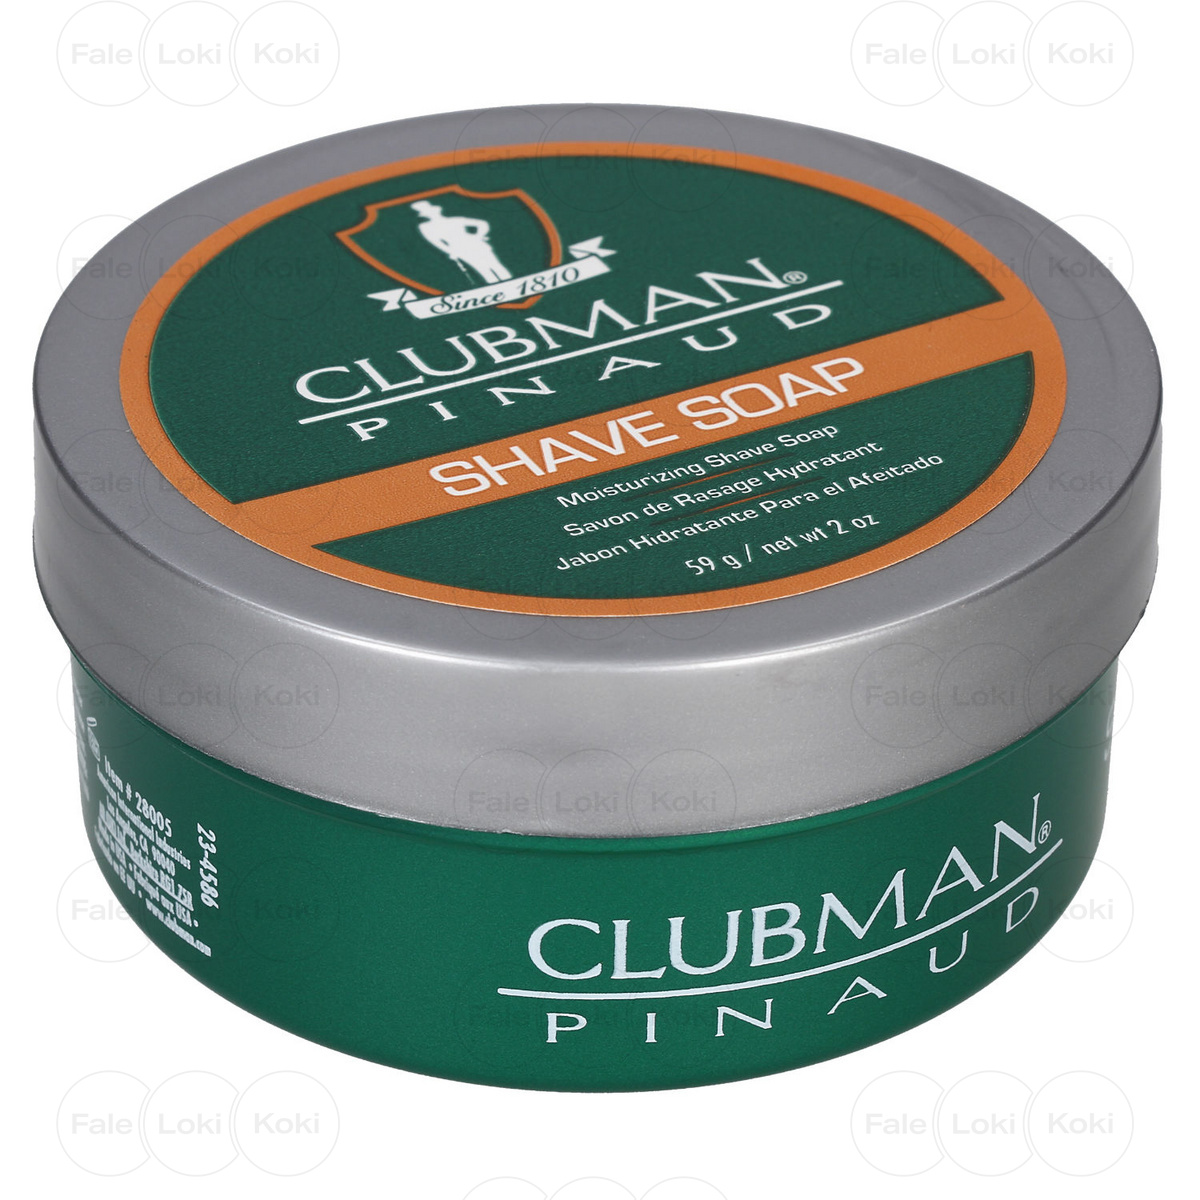 CLUBMAN mydło do golenia Shave soap 59 g